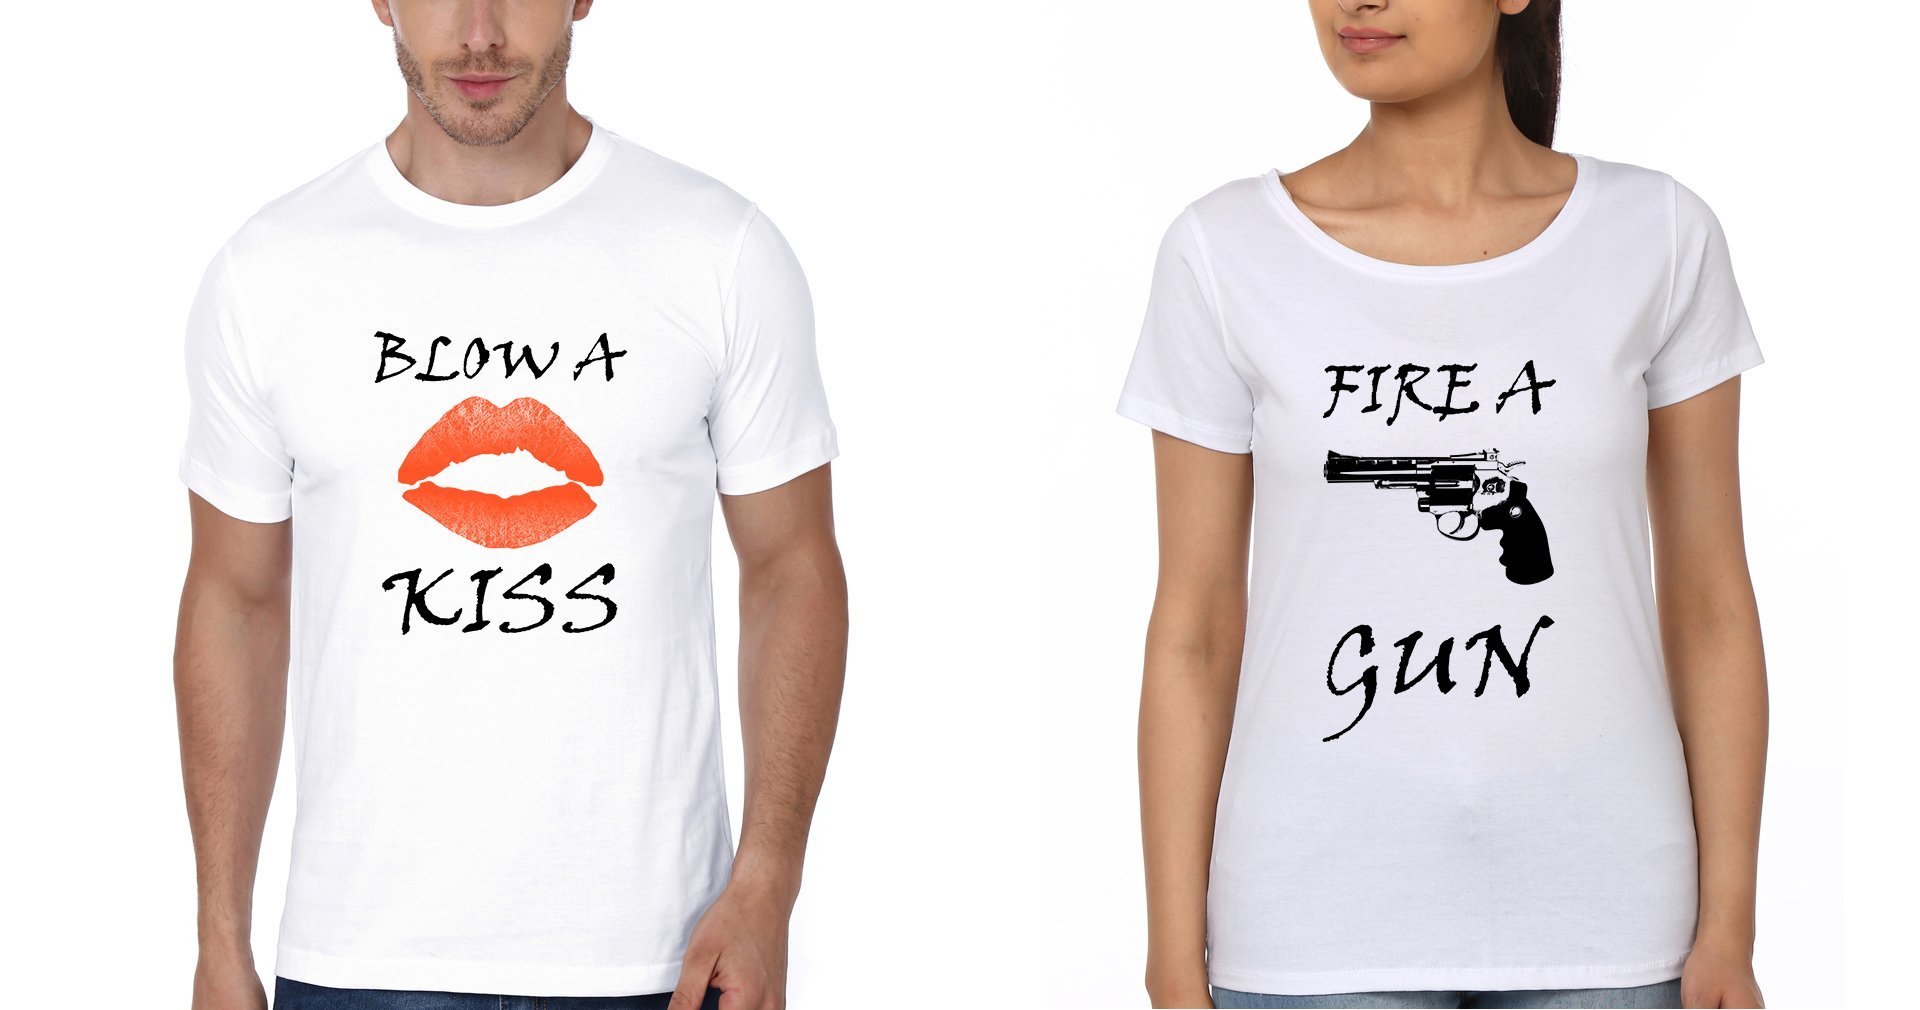 I Blow Kiss Couple Half Sleeves T-Shirts -FunkyTees